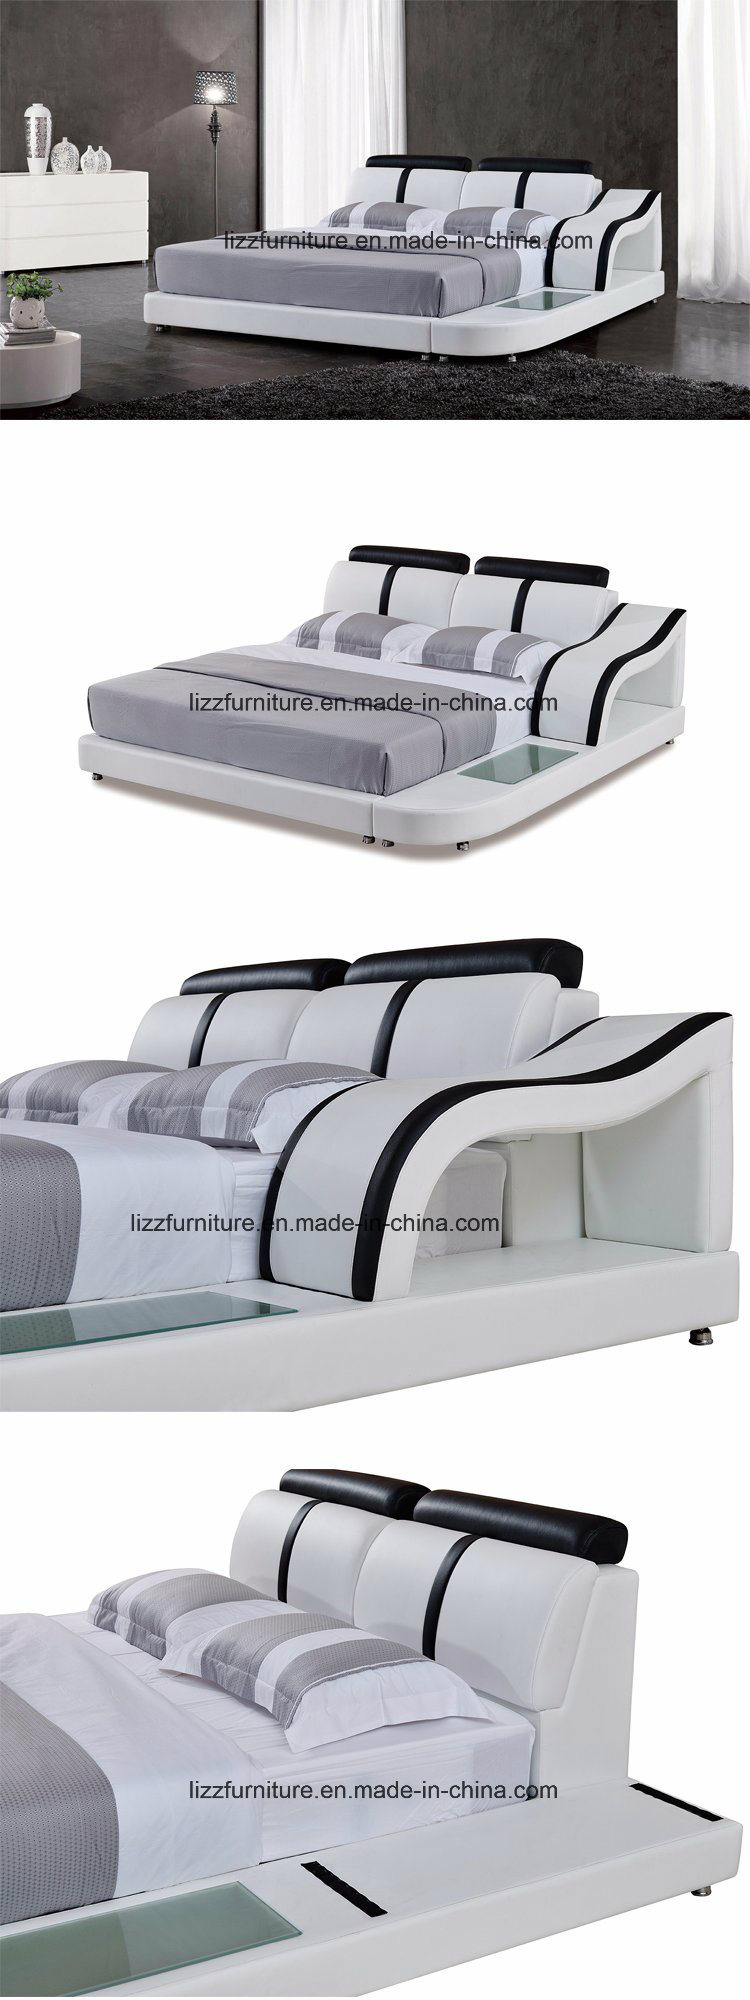 Adjustable Head Leather Bed with LED Illumination